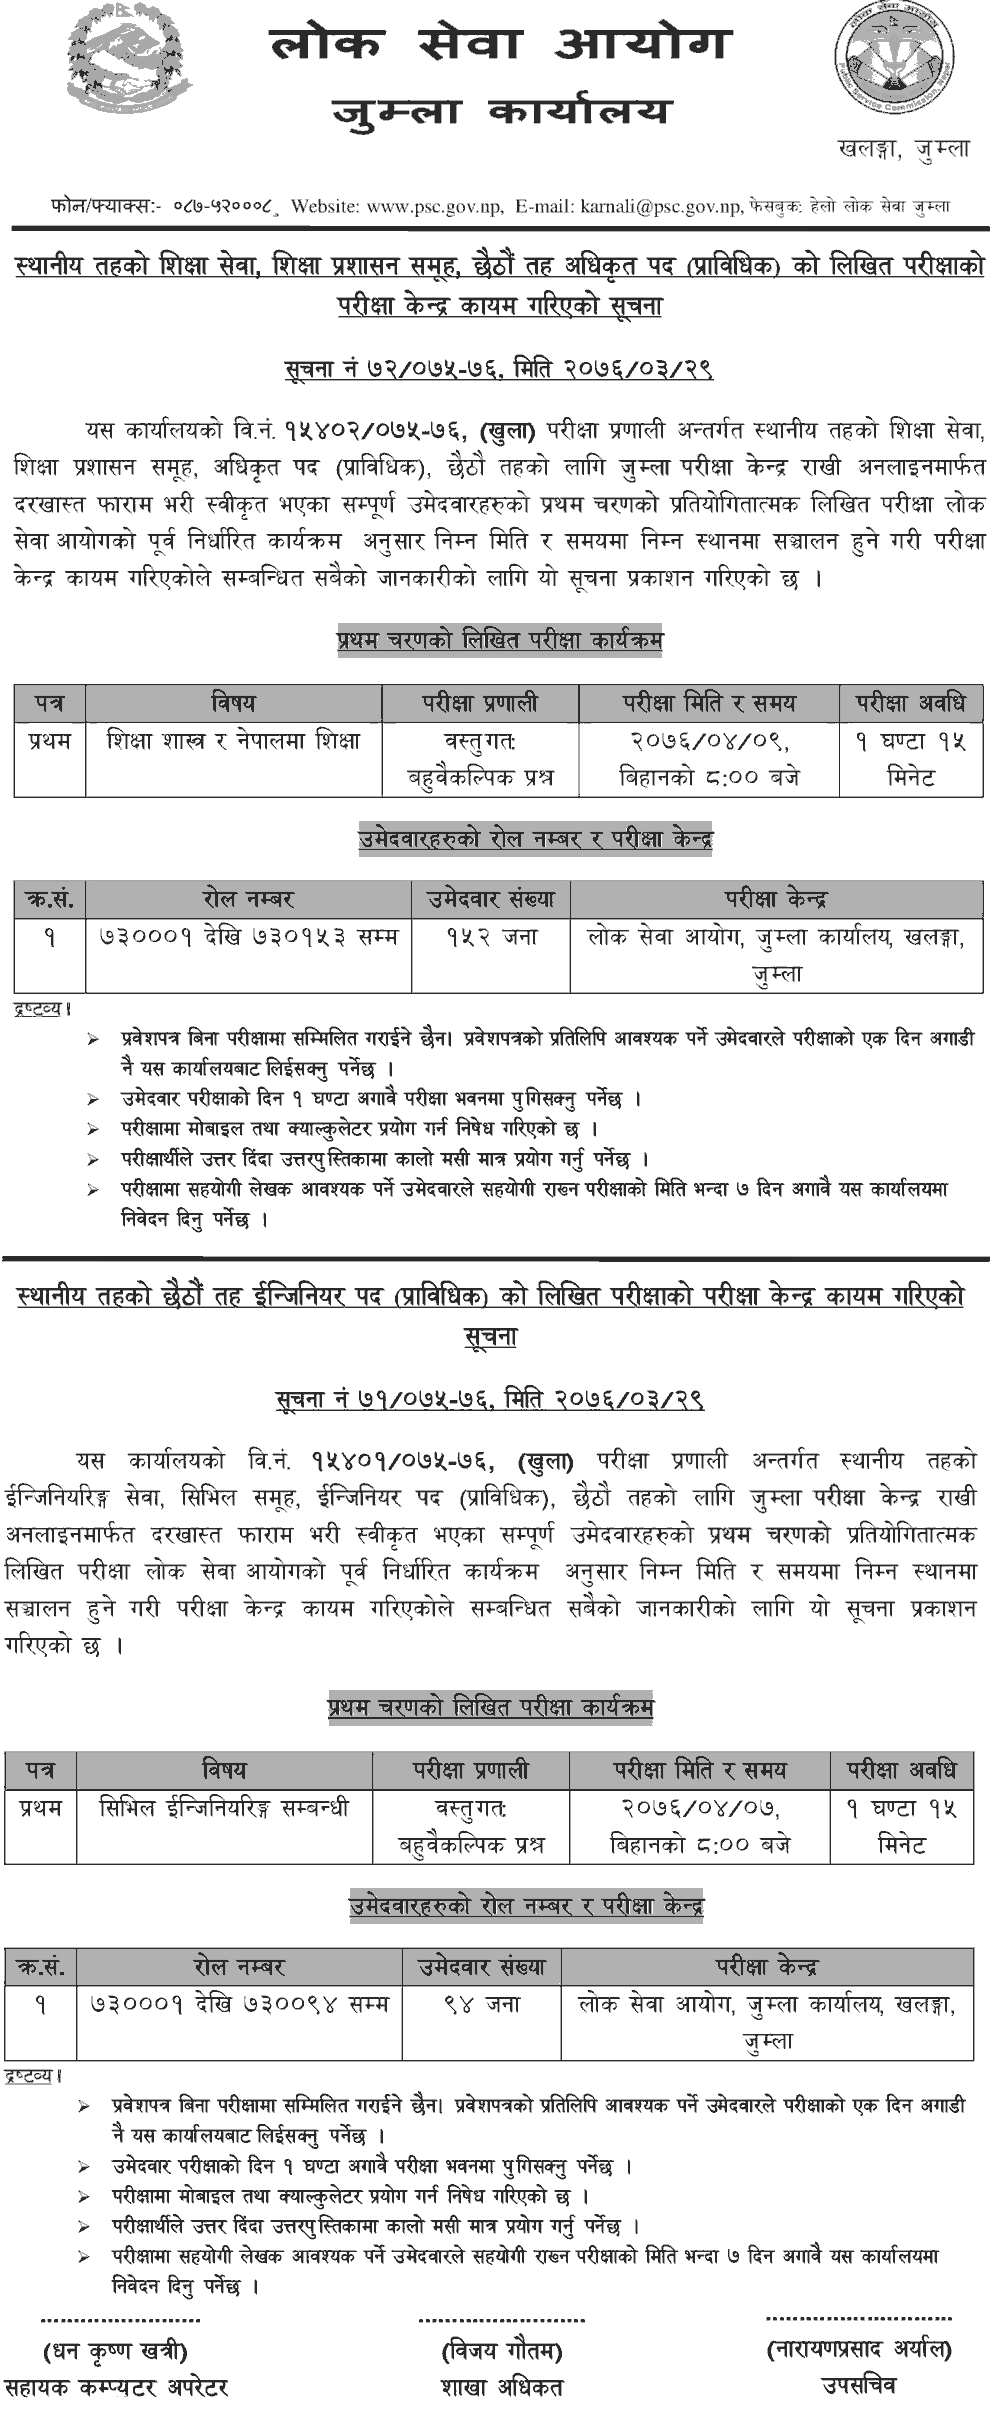 Local Level Mahila Bikas and Prabidhik 6th Level Written Exam Center - Jumla